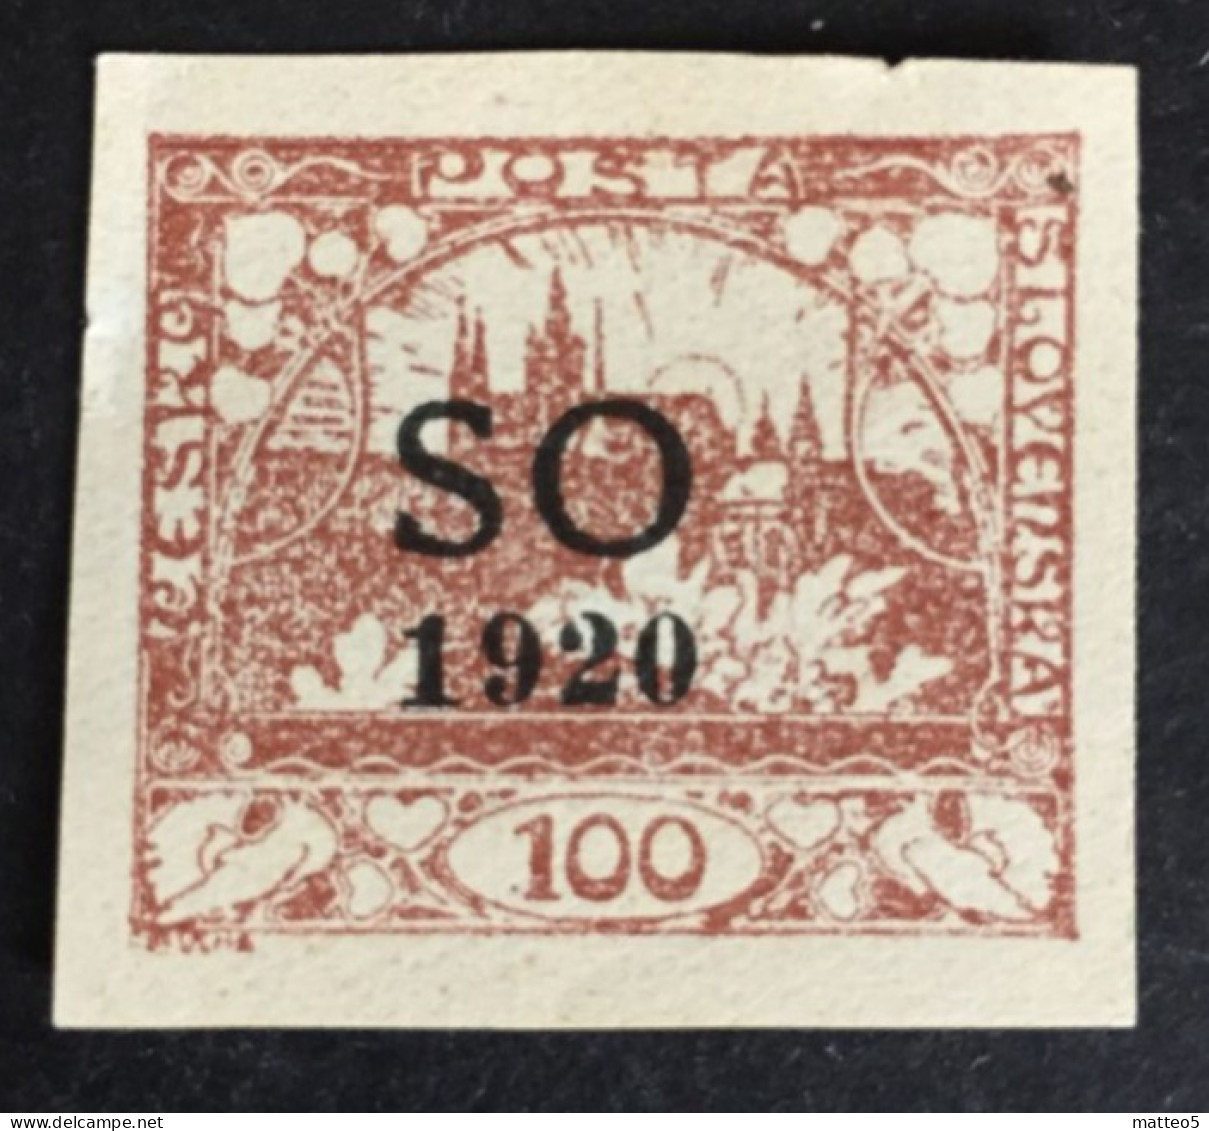 1920 Poland Eastern Silesia Czechoslovakia - Hradcany At Prague Overprint SO 100 - Unused ( Mint Hinged) - Schlesien